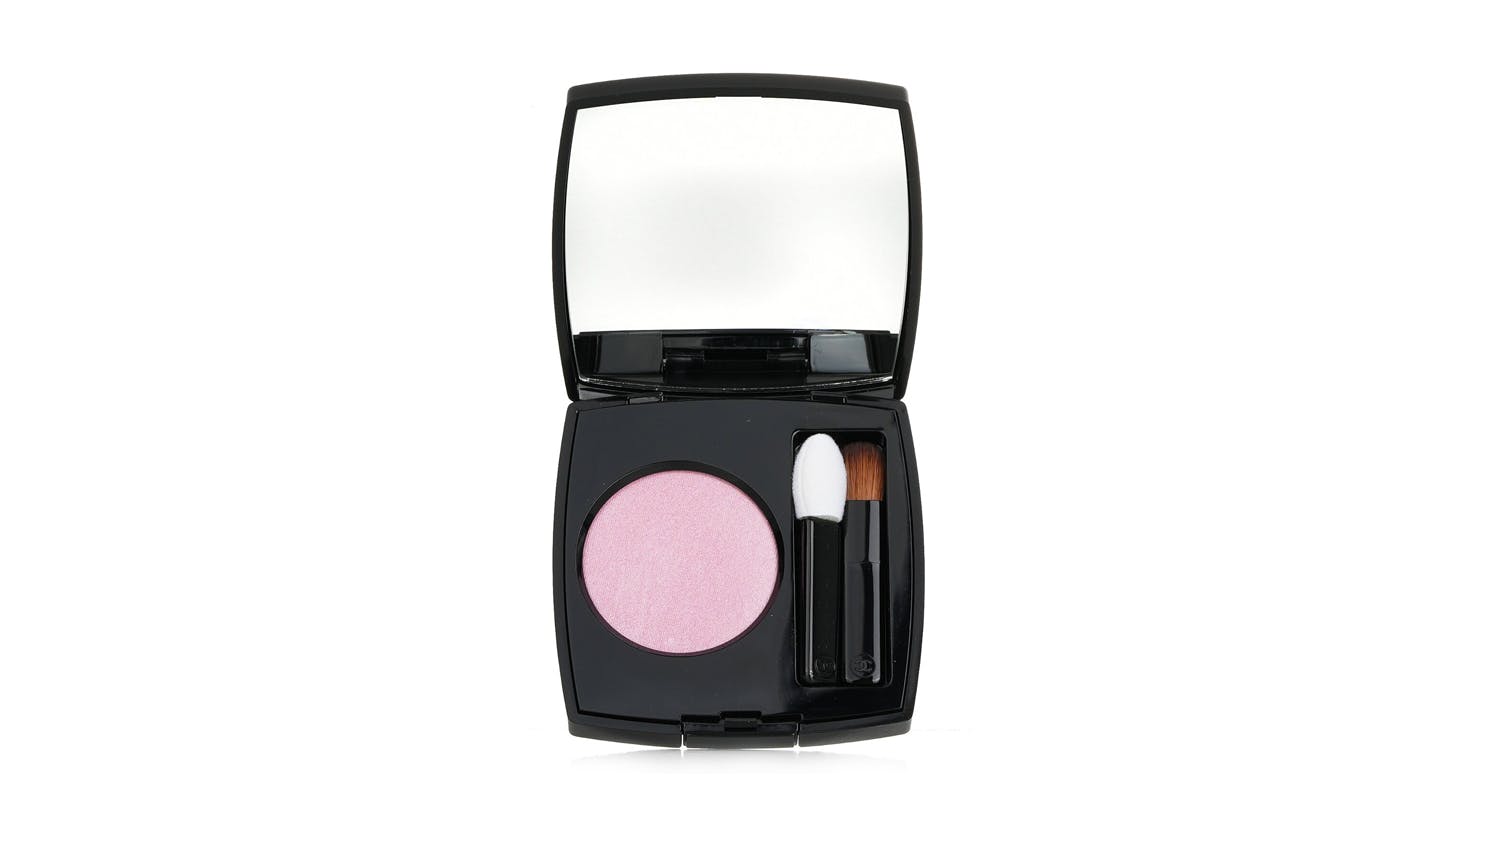 Chanel Ombre Premiere Longwear Powder Eyeshadow - # 12 Rose Synthetique  (Satin) 2.2g/0.08oz